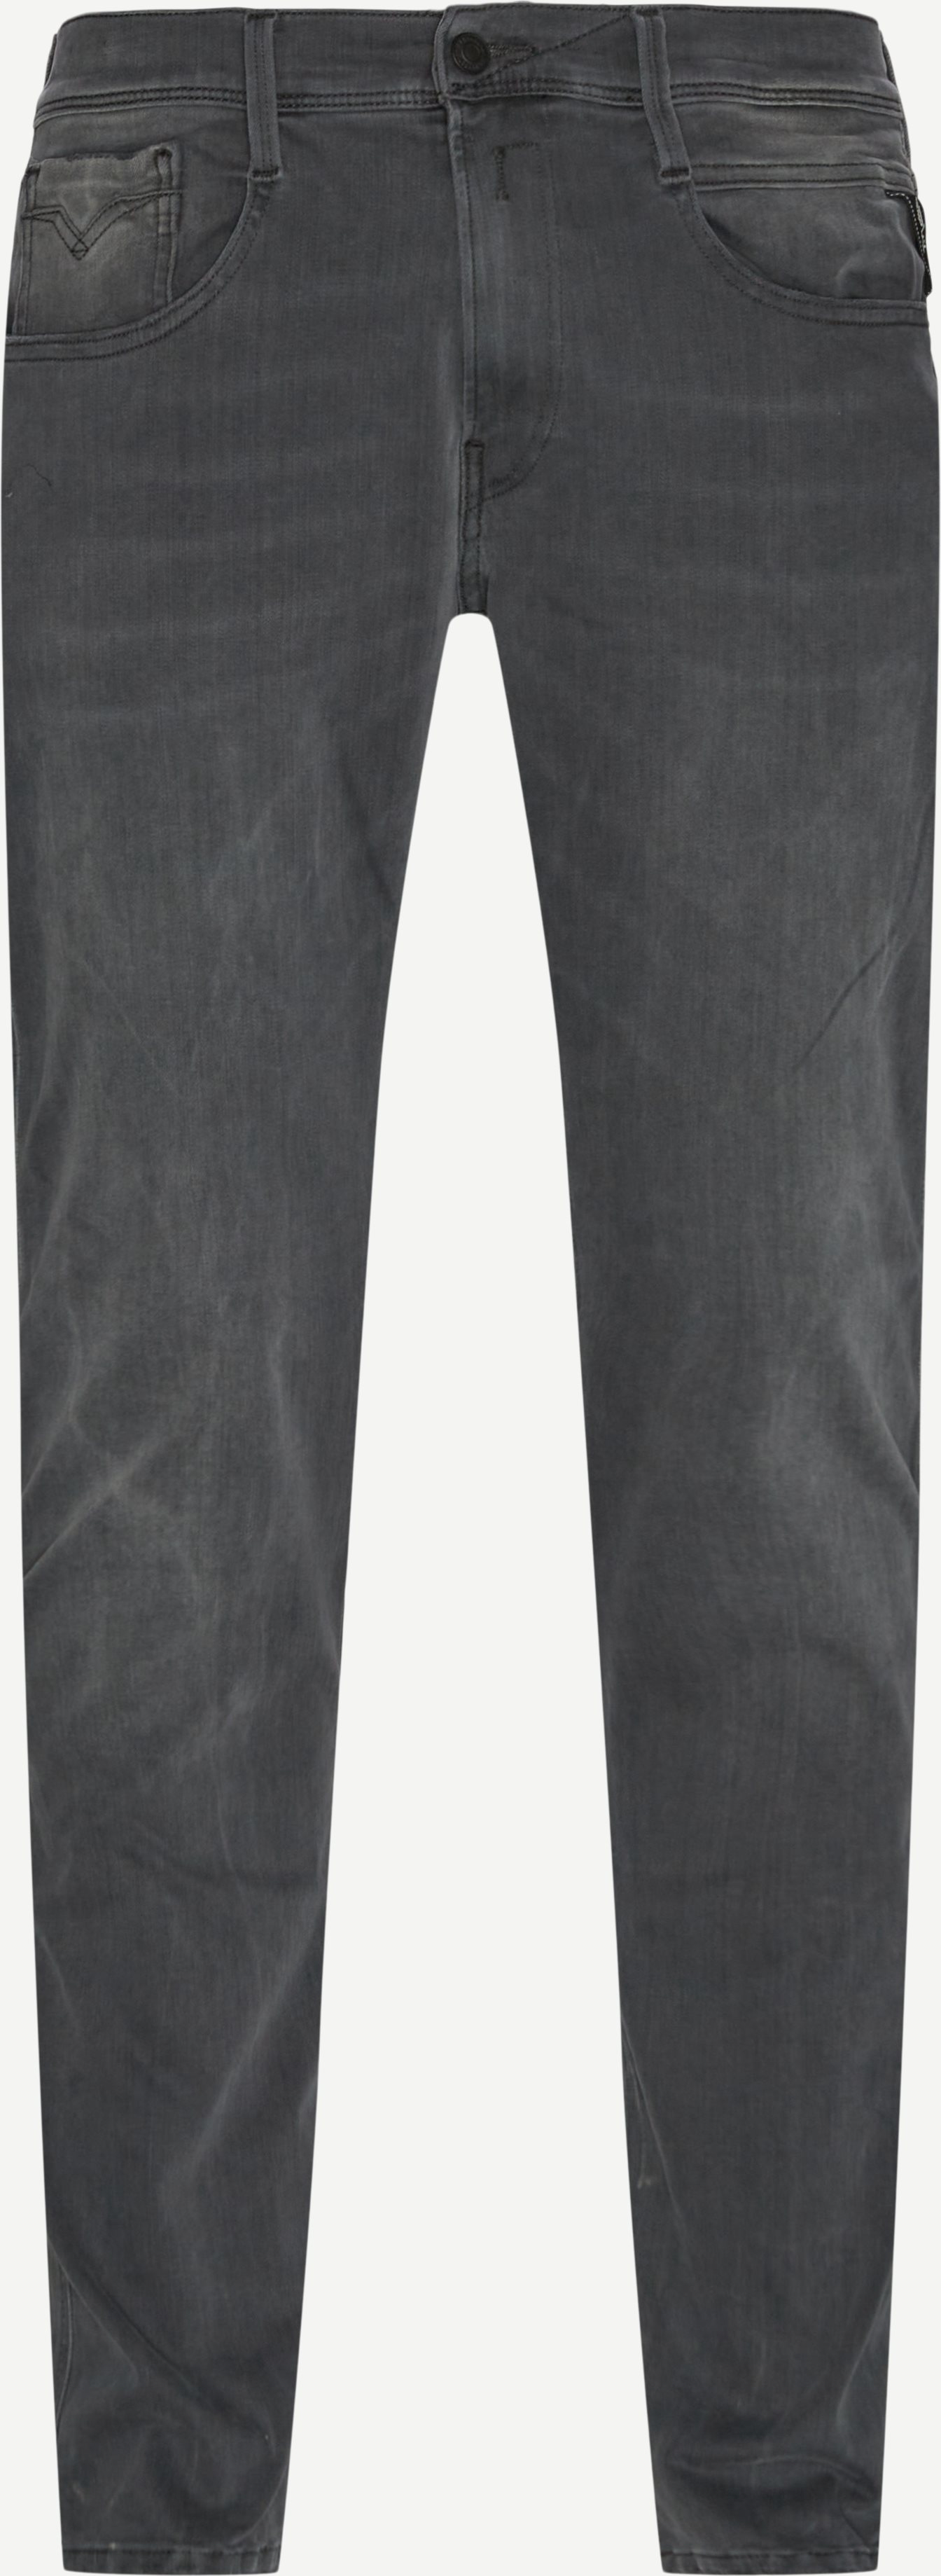 661 RB08 Anbass Hyperflex Jeans - Jeans - Slim fit - Grey